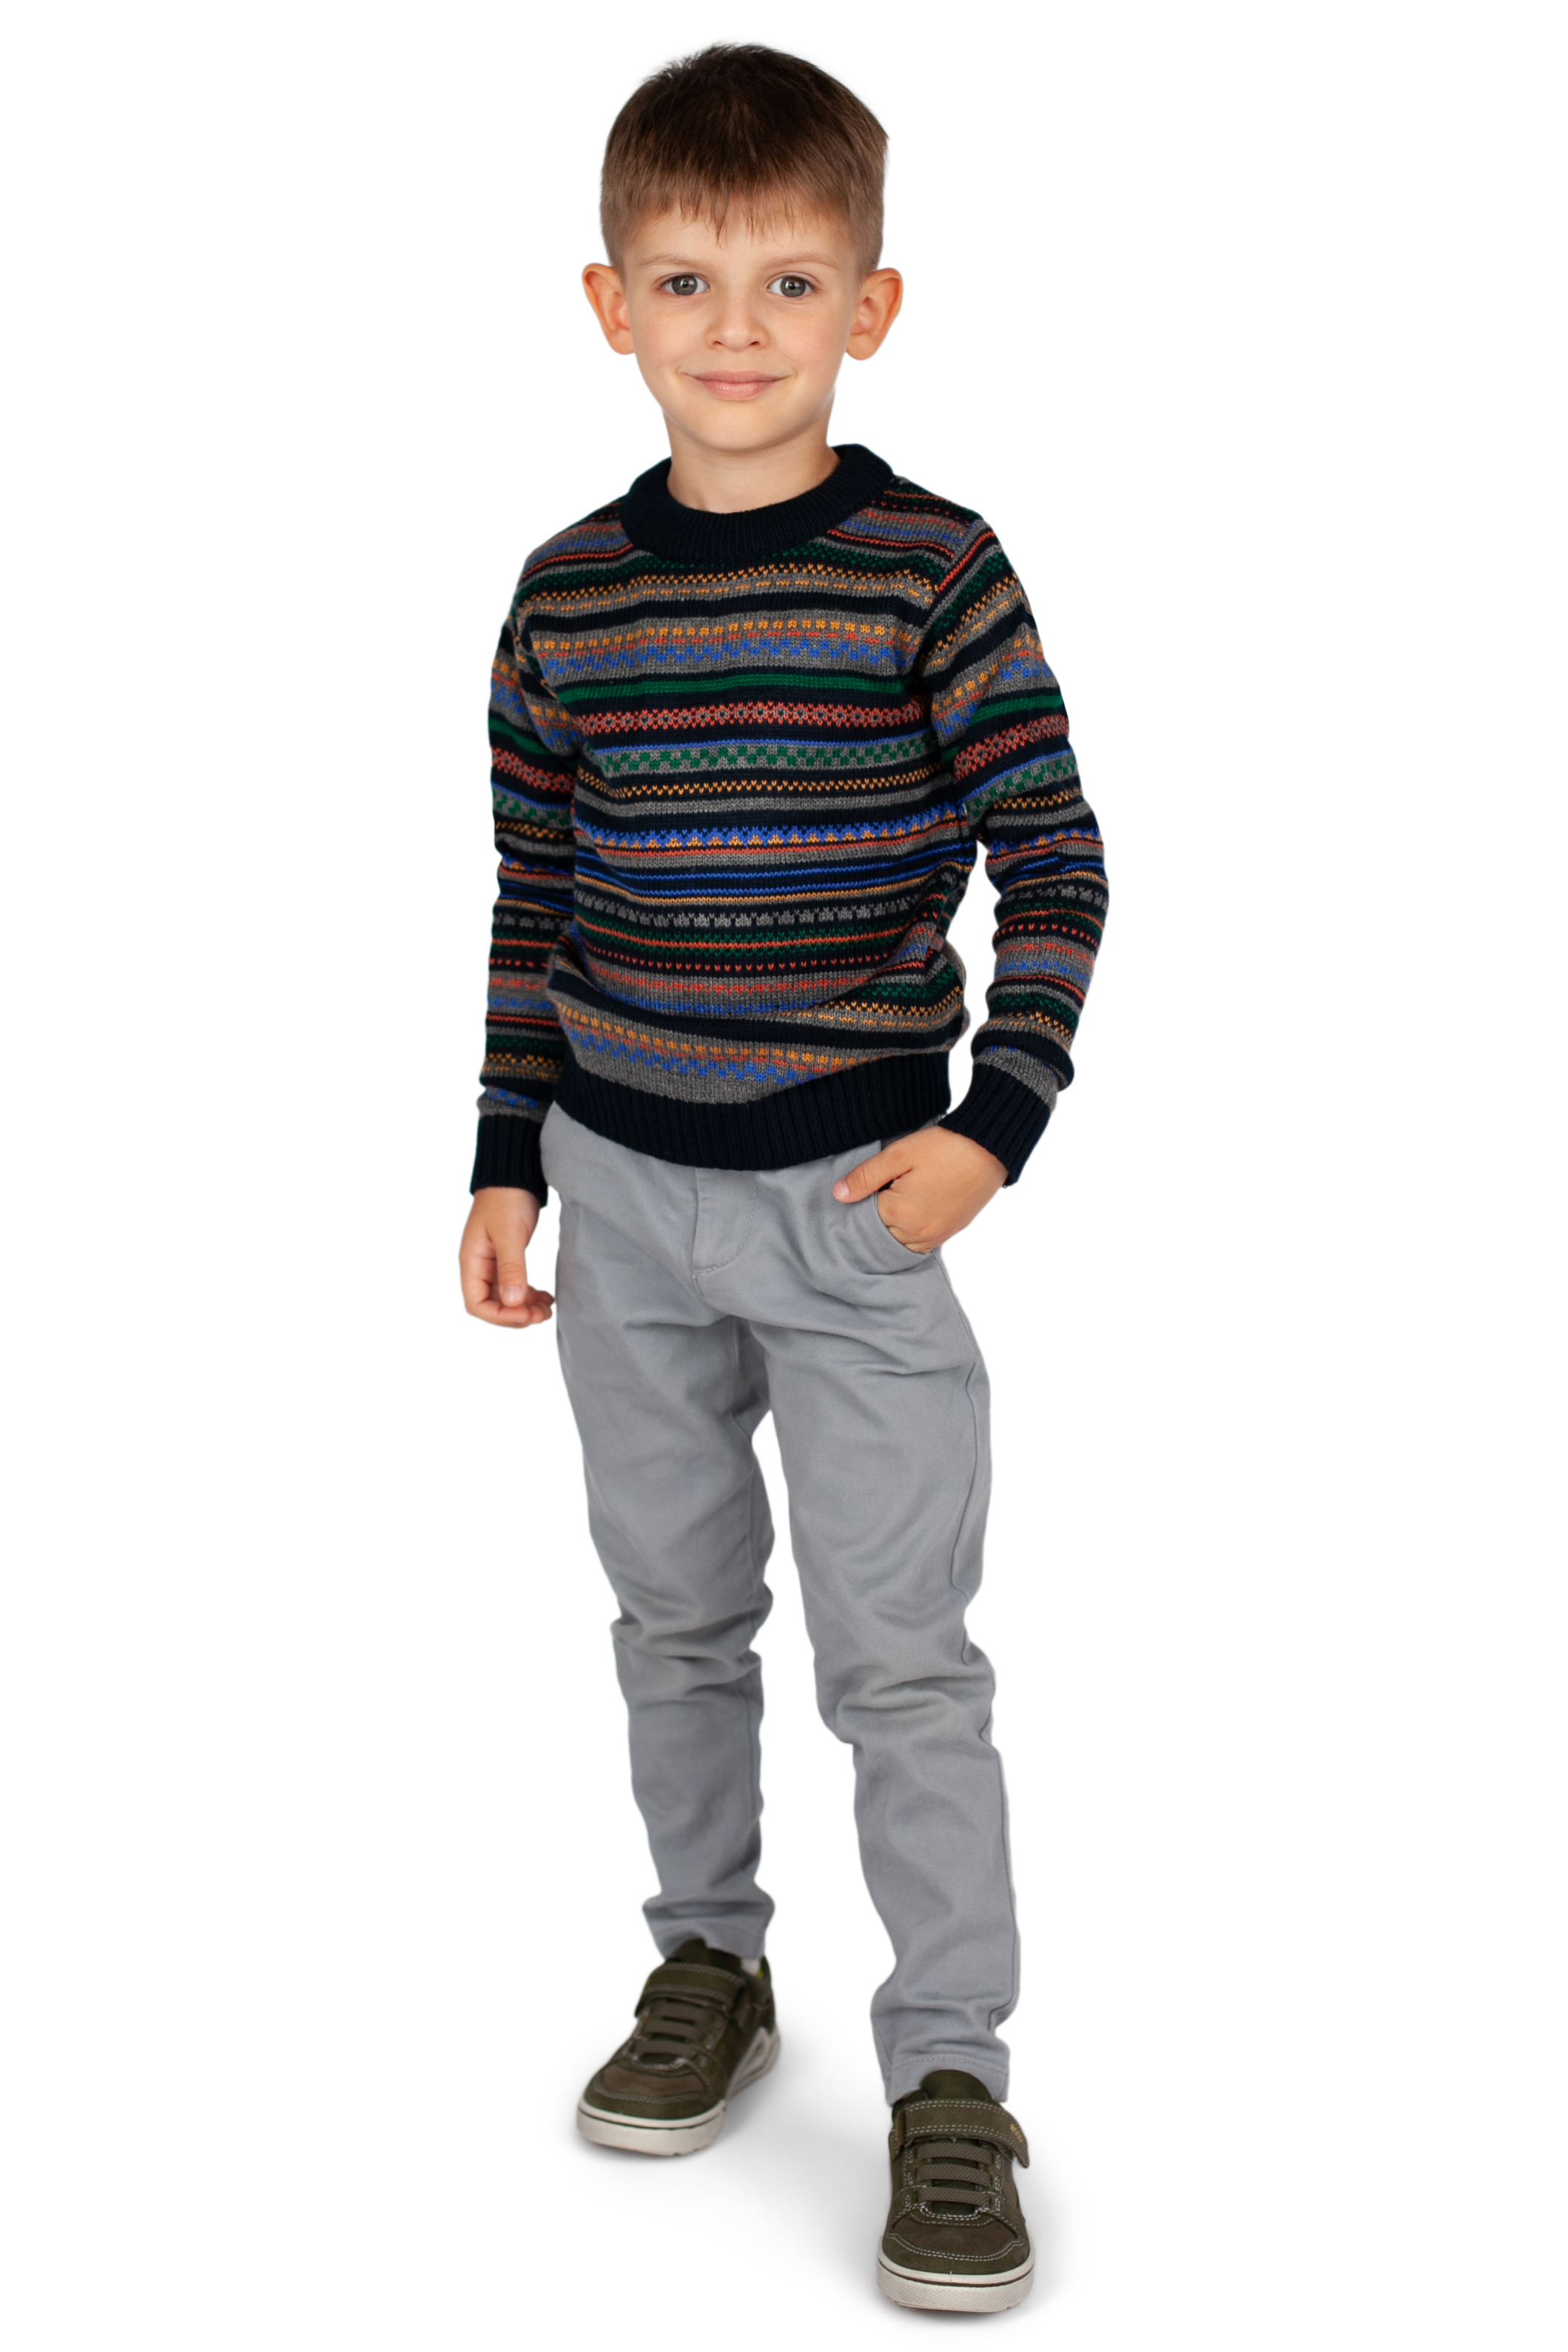 Джемпер для мальчика (арт. baon BK638504), размер 98-104, цвет multicolor#многоцветный Джемпер для мальчика (арт. baon BK638504) - фото 6